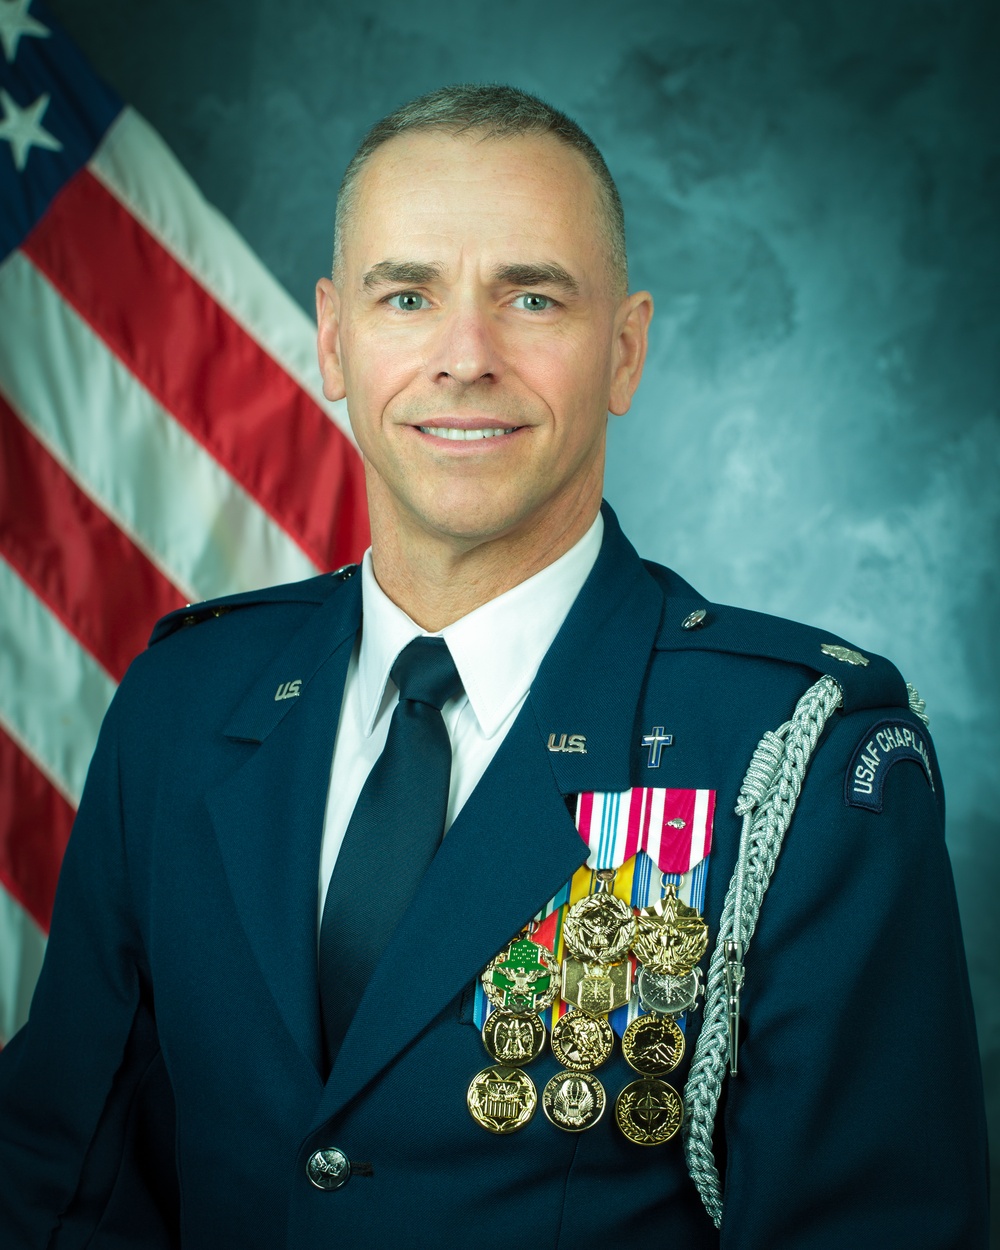 Official portrait, Lt. Col. Michael W. Husfelt, United States Air Force